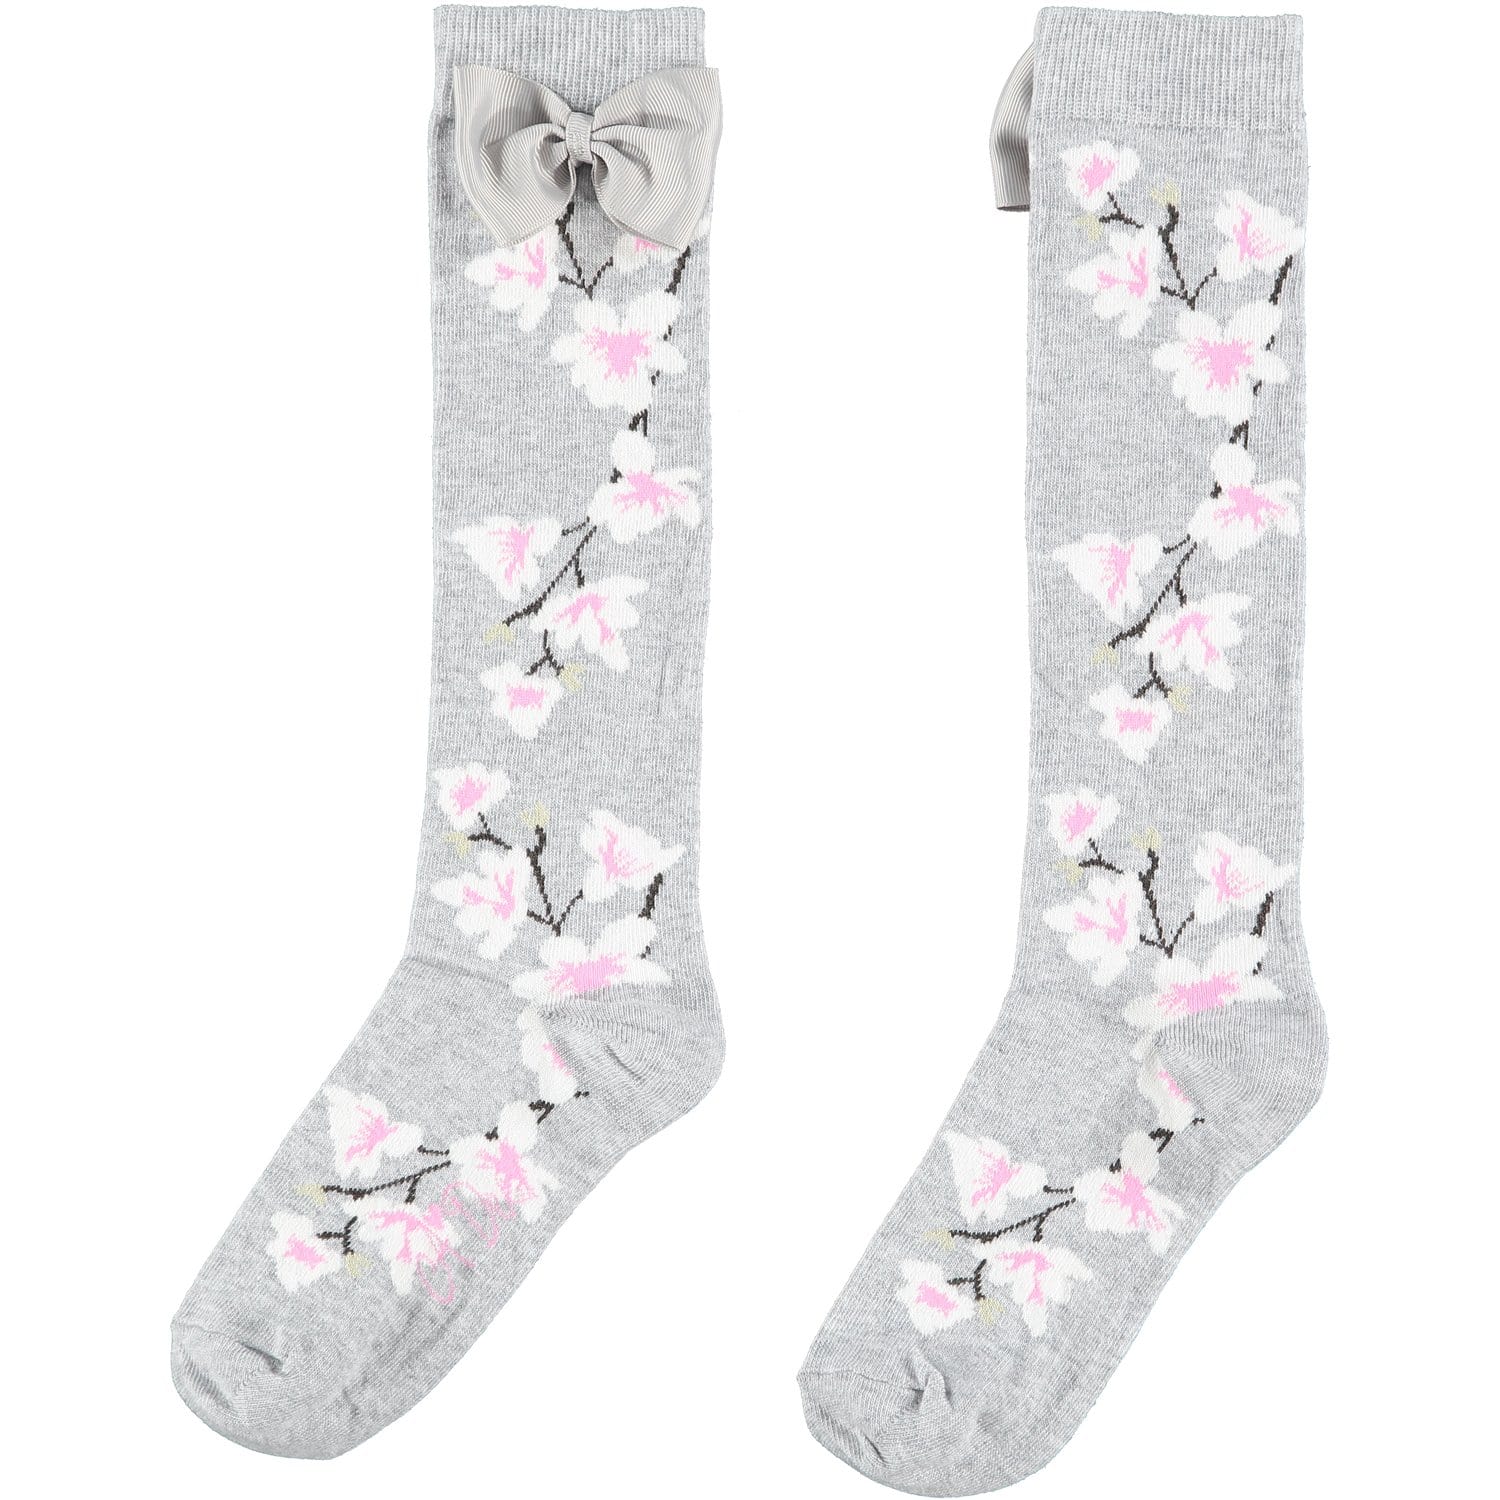 A DEE - Magnolia Knee High Socks - Grey